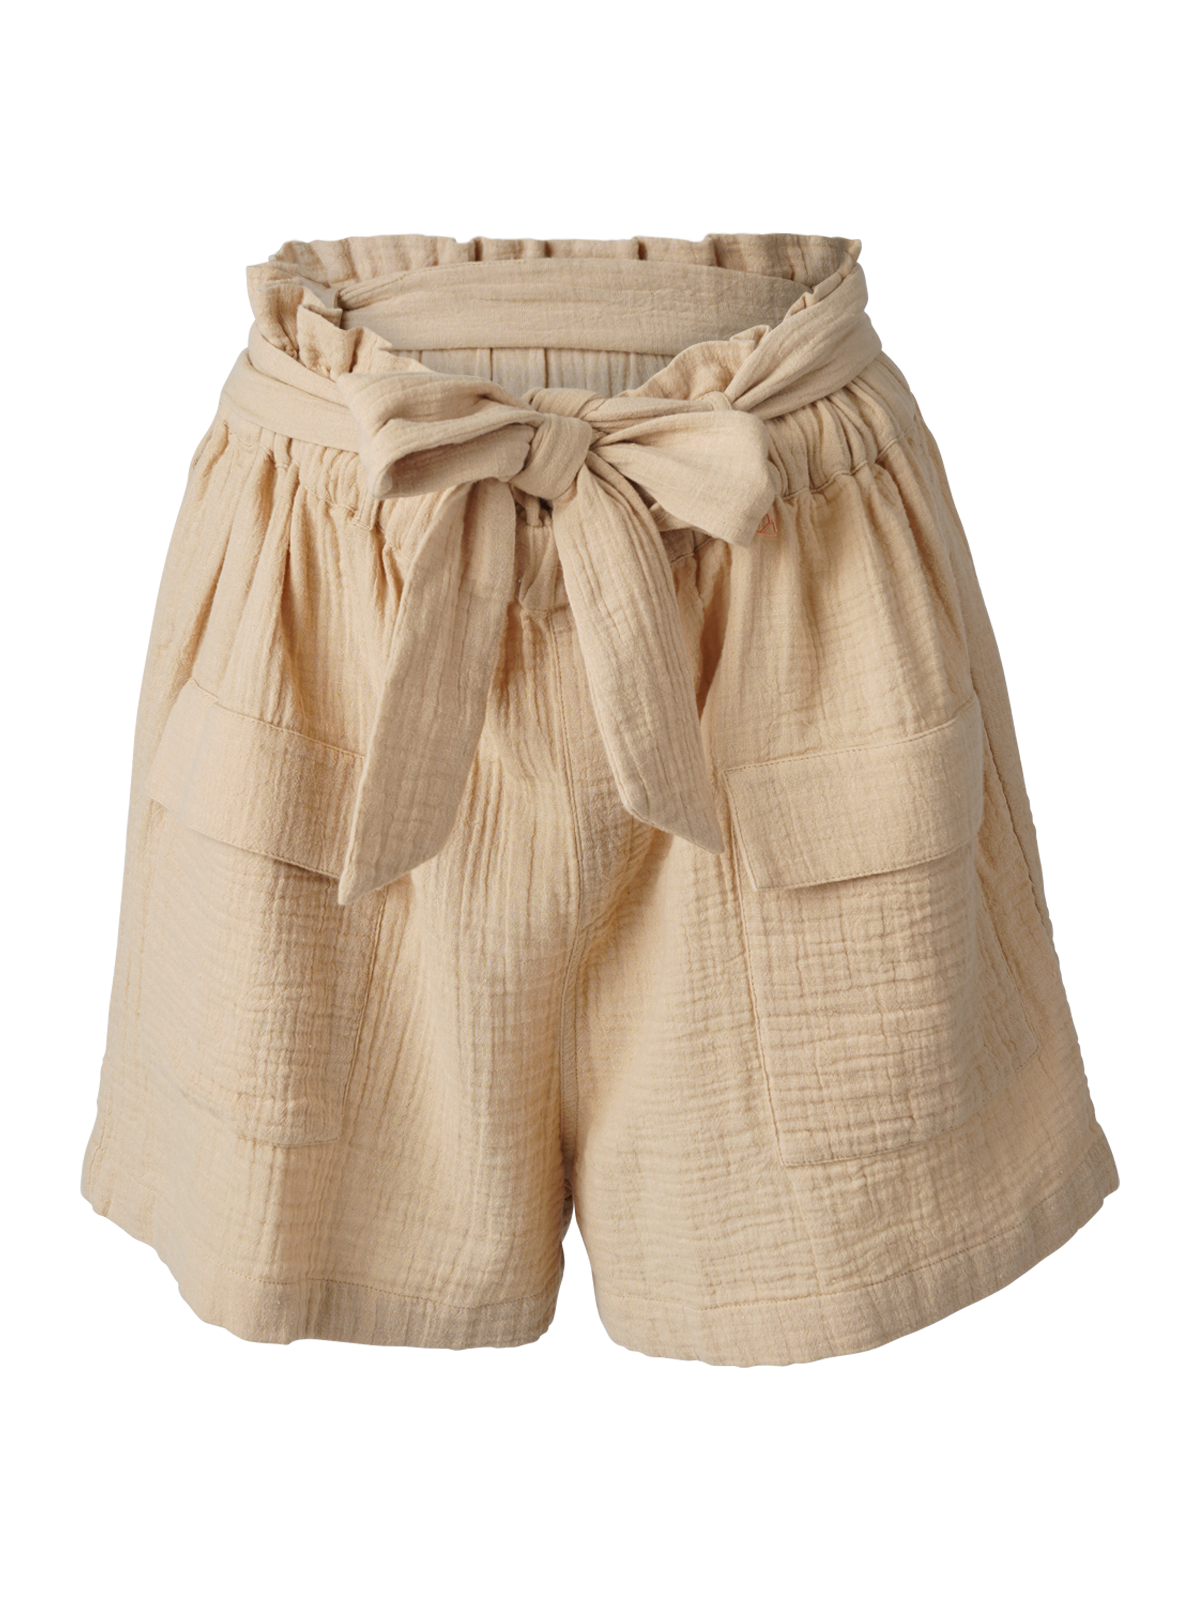 Brunotti Ryo Dames Shorts - Beige - XL